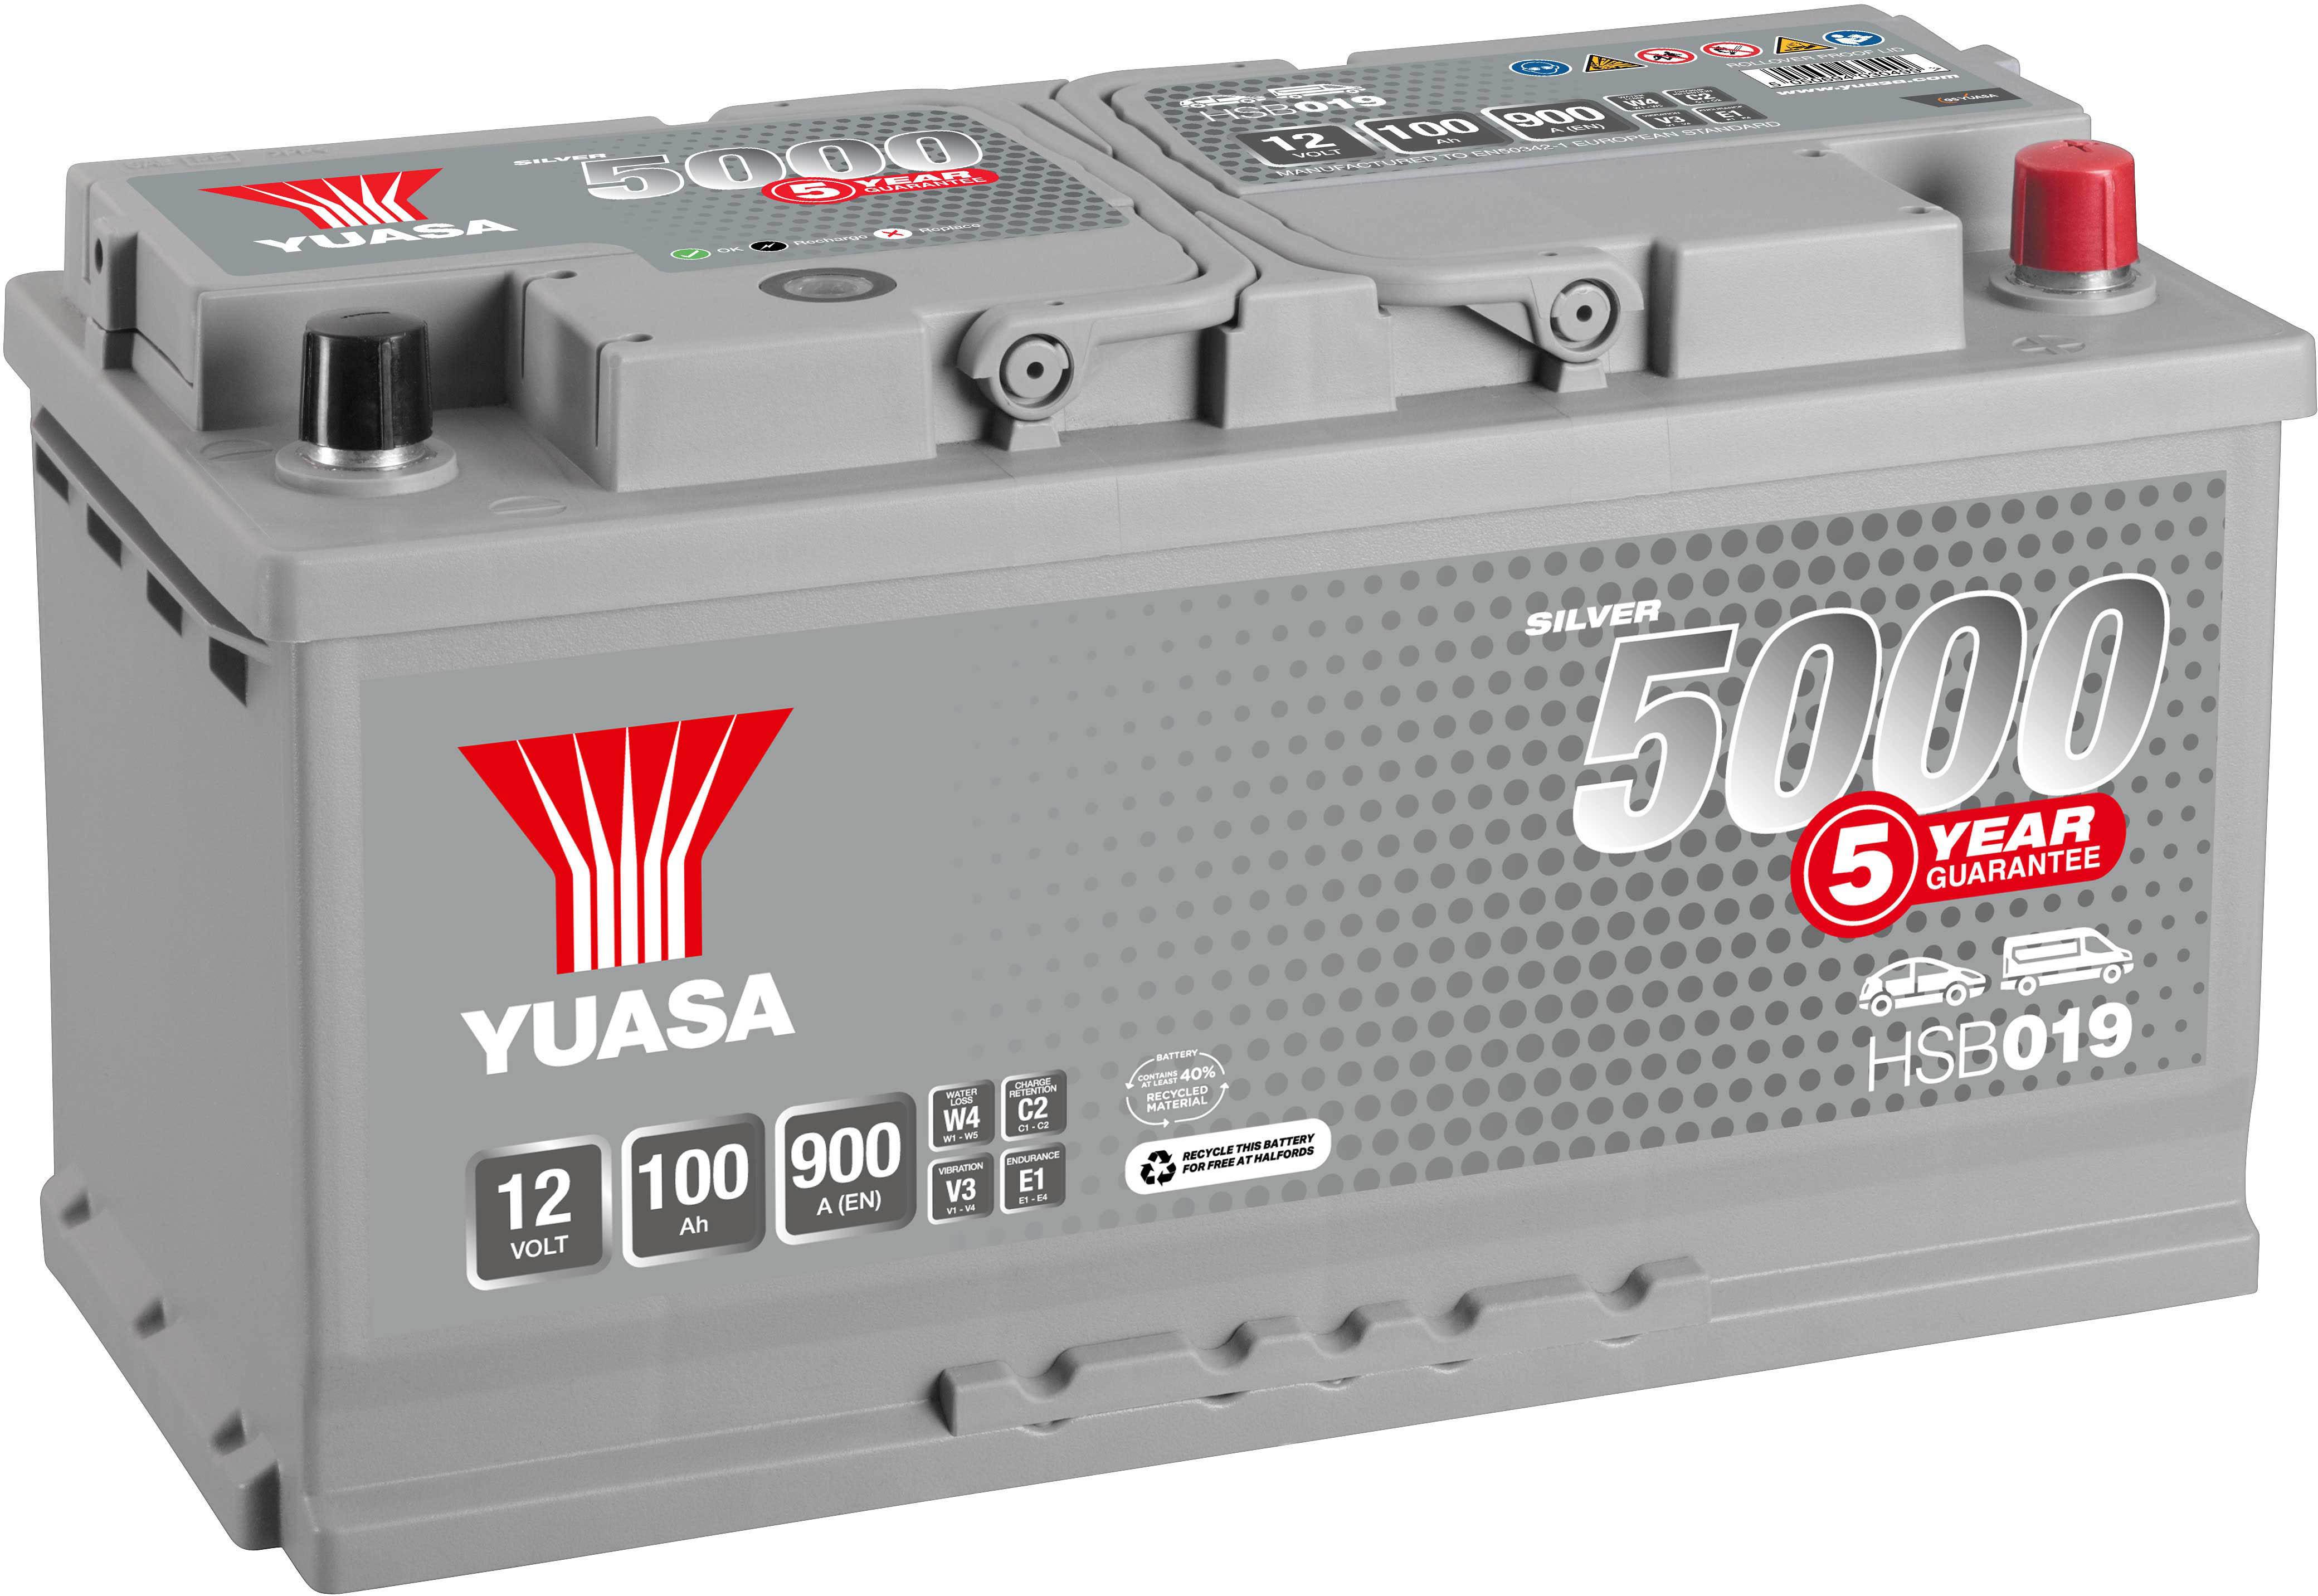 Yuasa  Hsb019 Silver 12V Car Battery 5 Year Guarantee